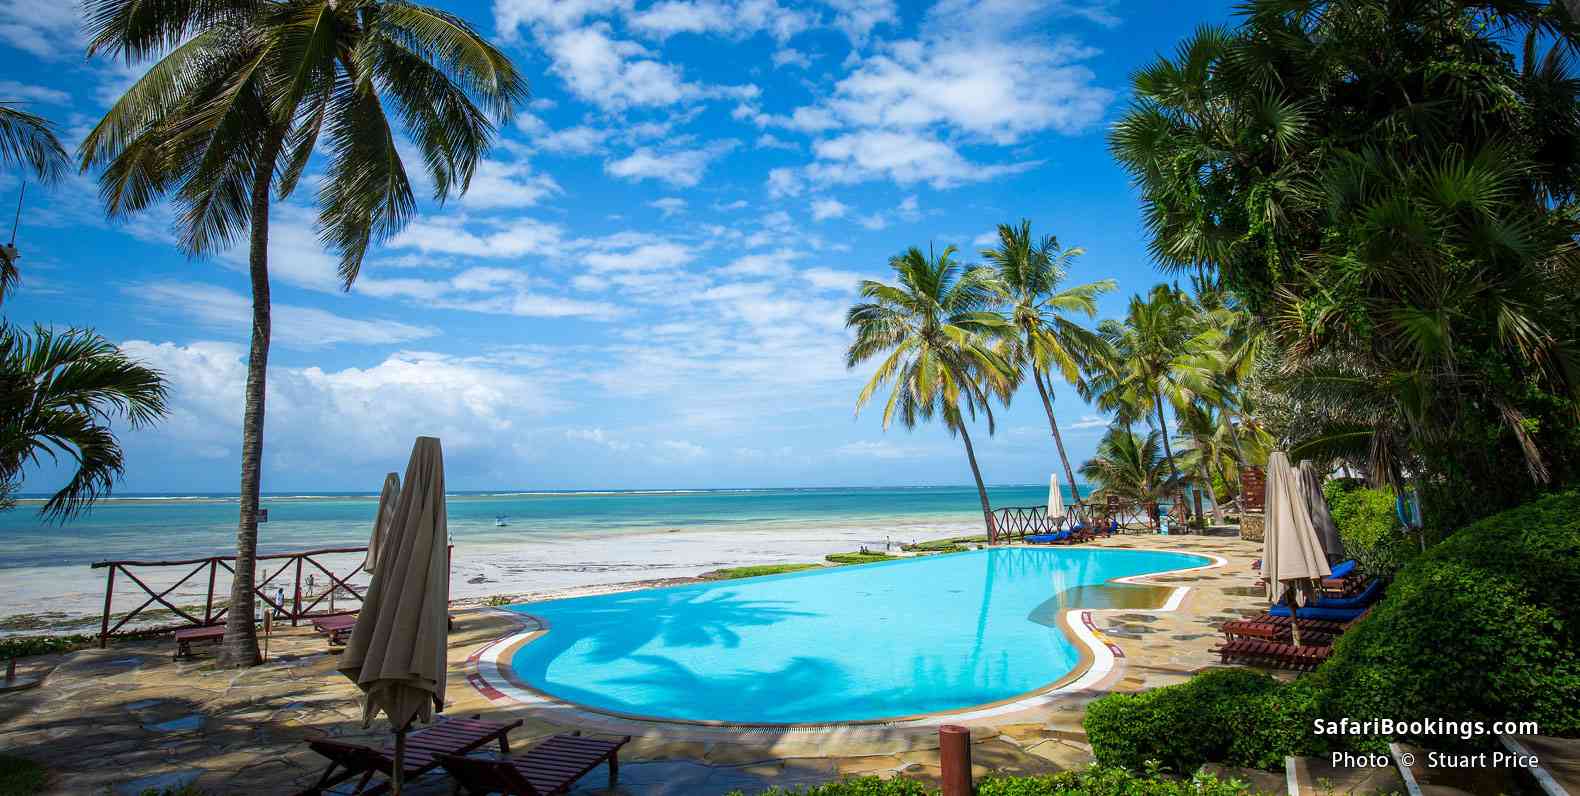 Swimming pool area at Voyager Beach Resort in Mombasa